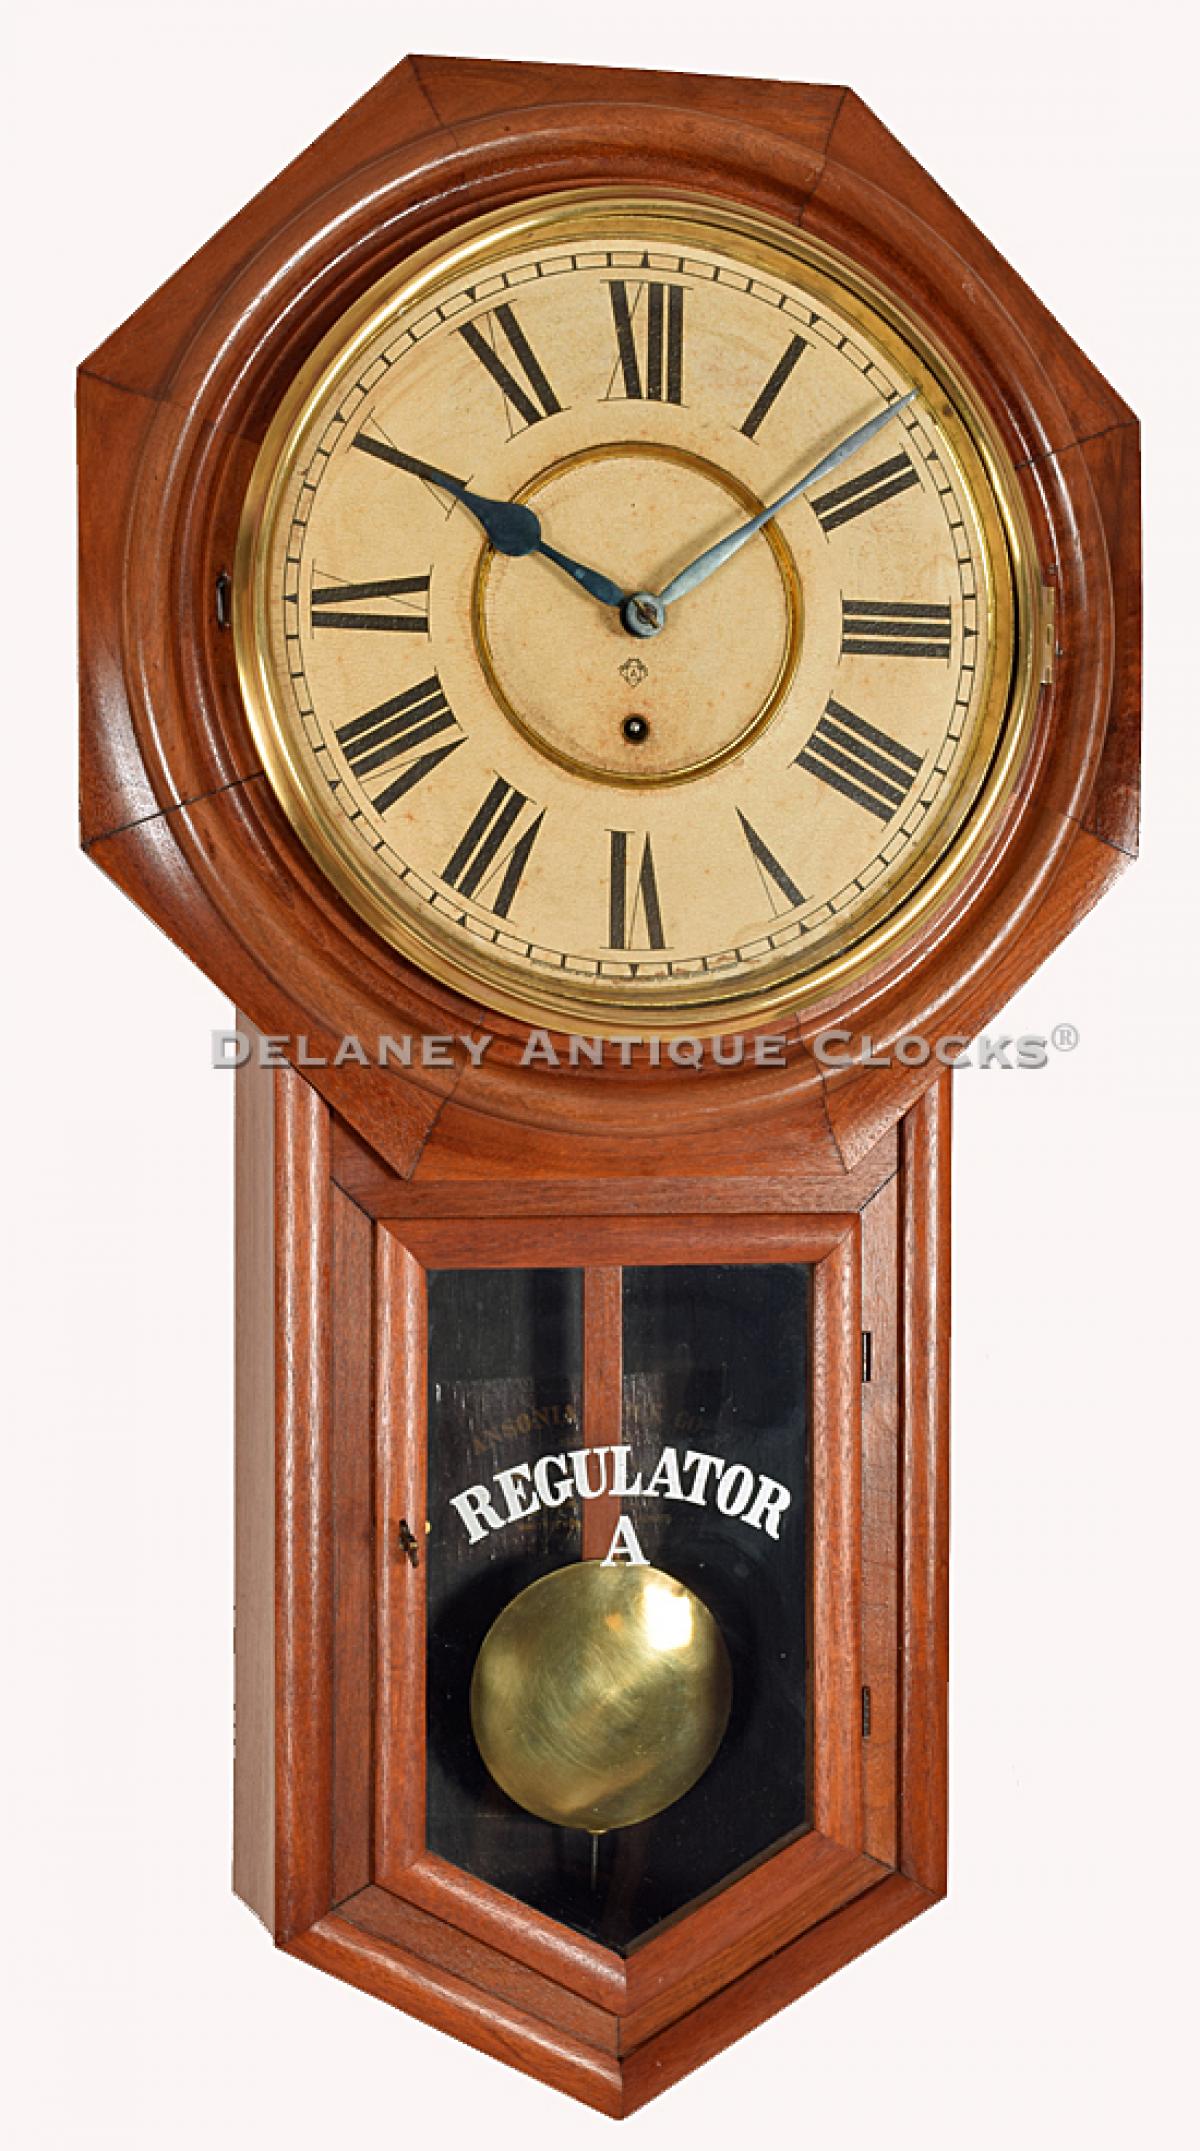 Ansonia Clock Co. The REGULATOR A. Long drop school clock. A wall